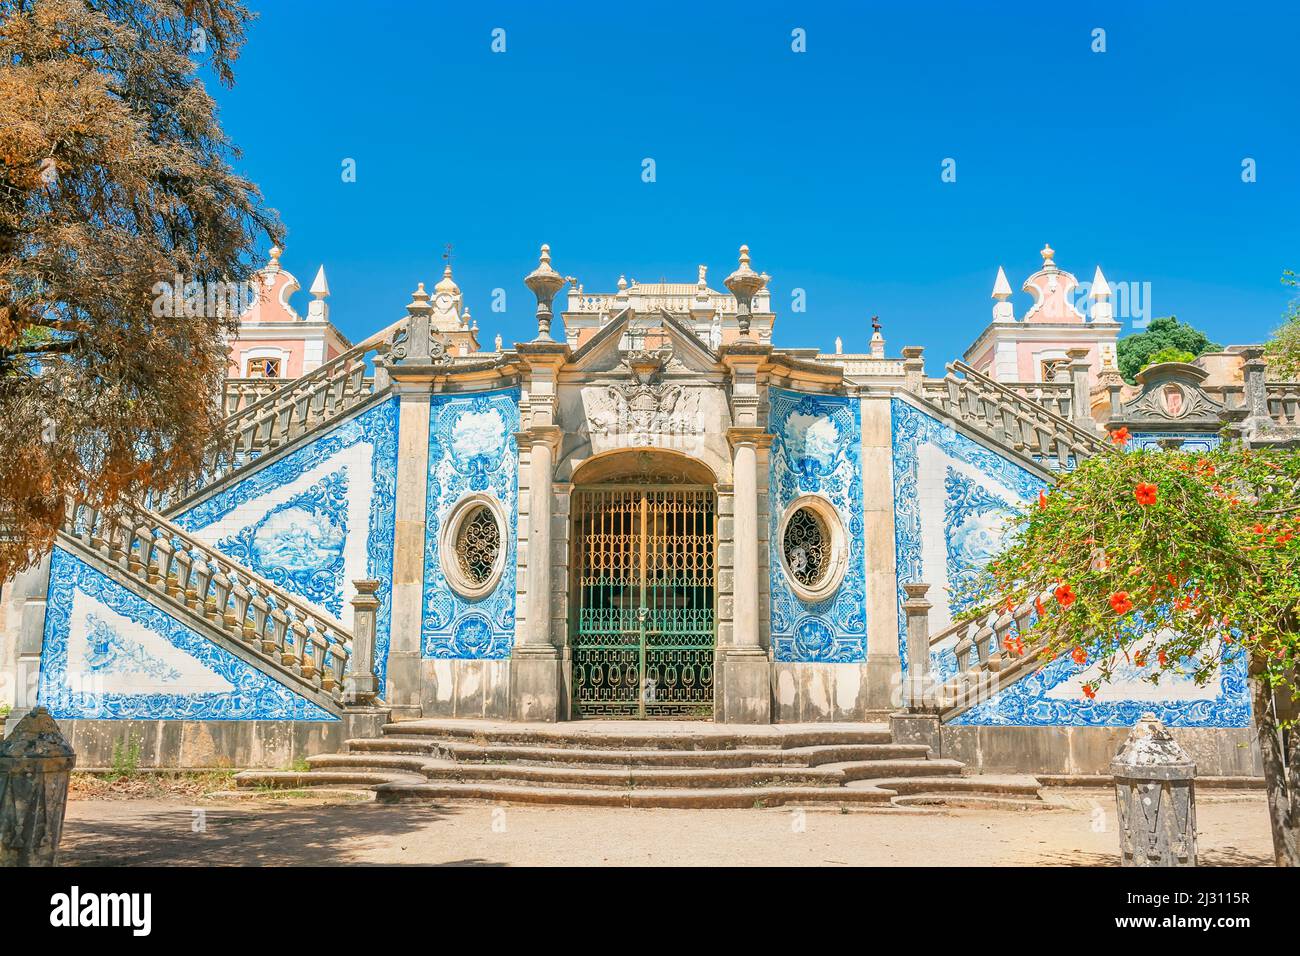 Estoi Palace, Estoi, Algarve, Portugal Stock Photo